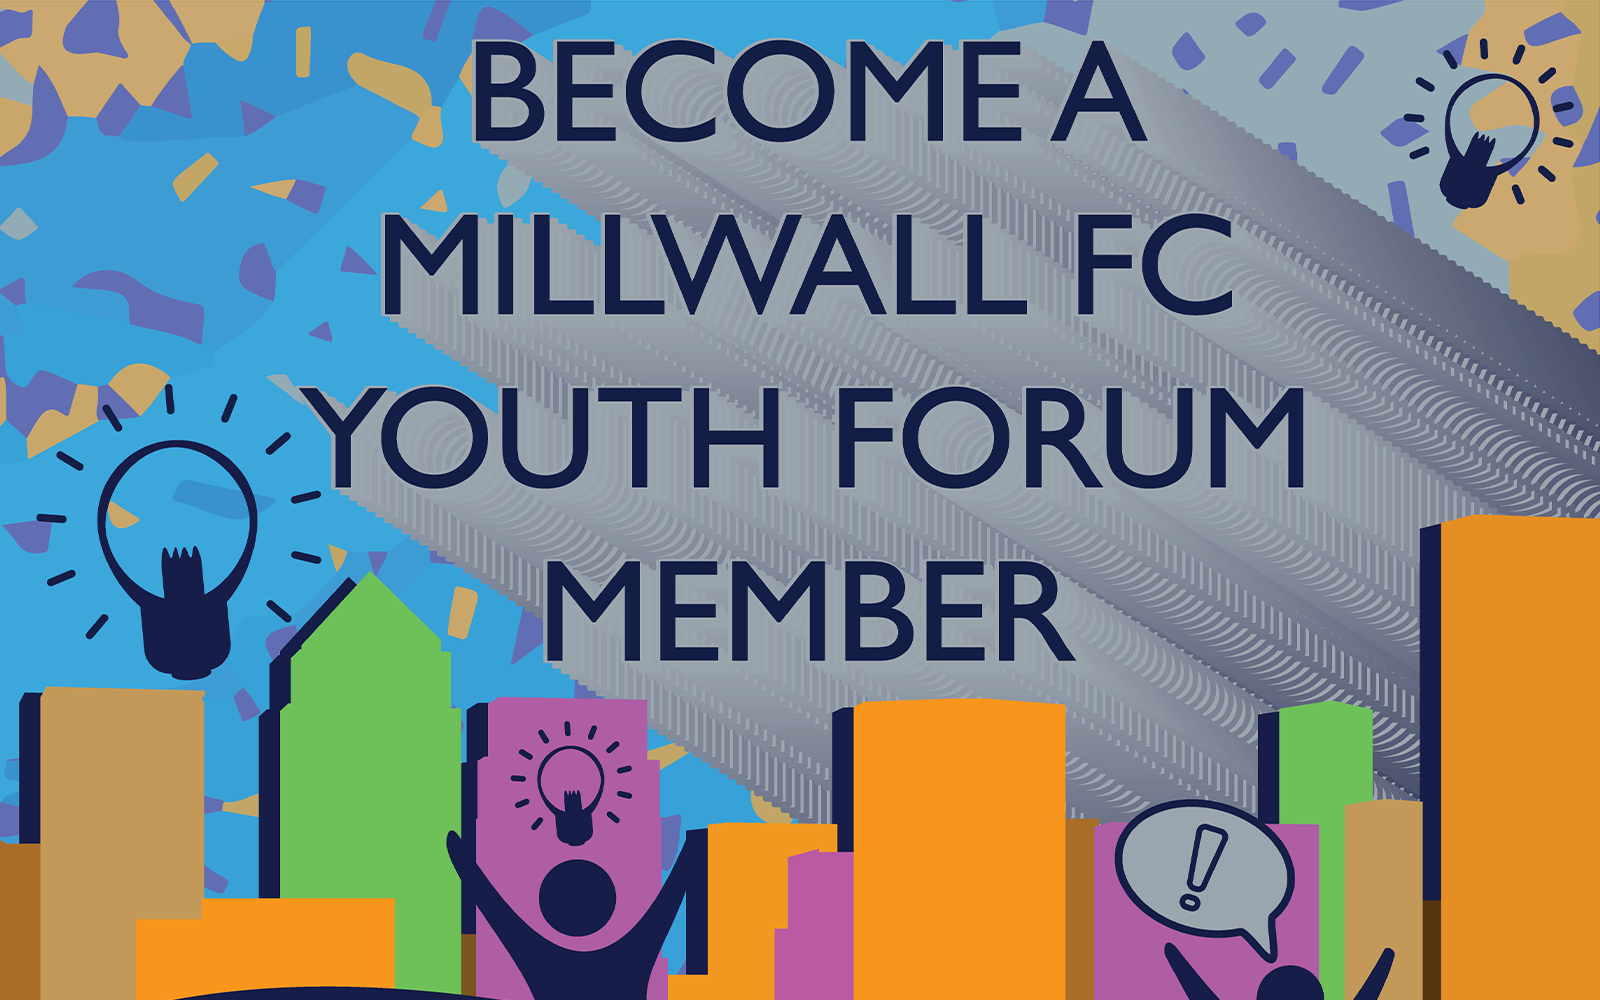 Millwall Football Club and Millwall Community Trust launch Youth Forum